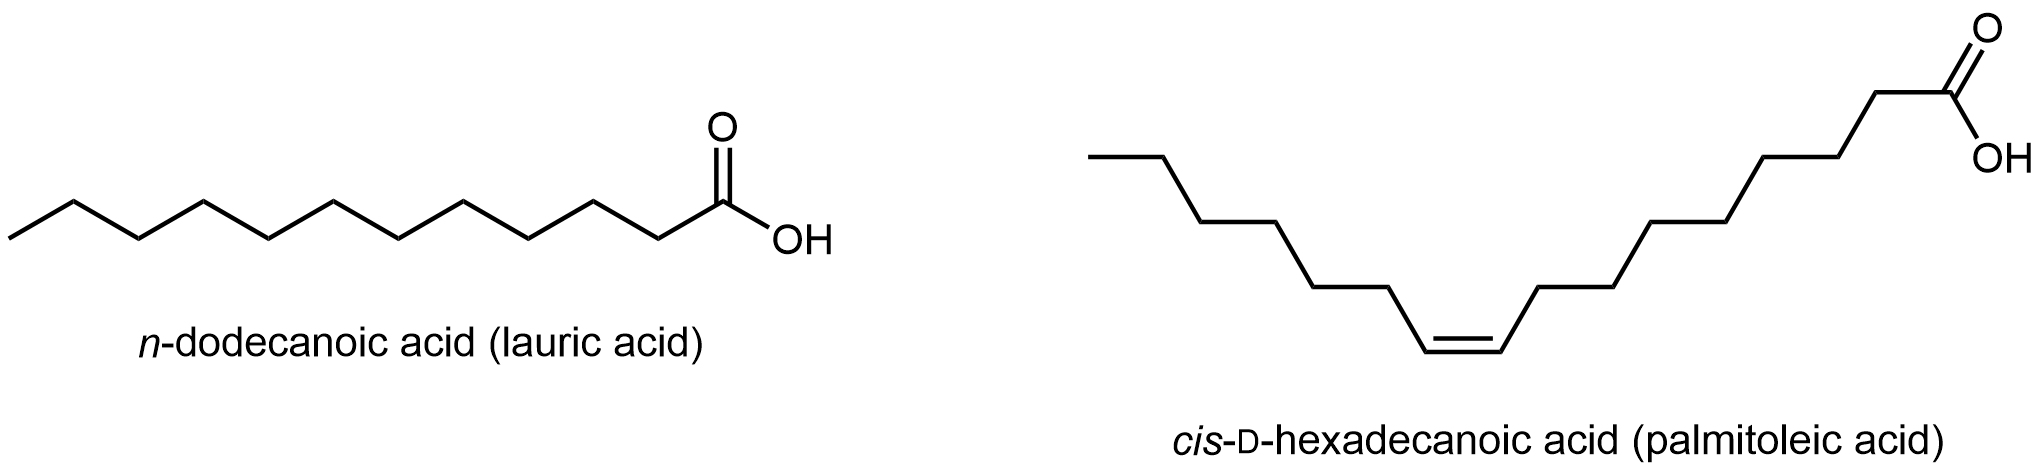 Bond line structure of n-dodecanoic acid (lauric acid) and cis-D-hexadecanoic acid (palmitoleic acid).